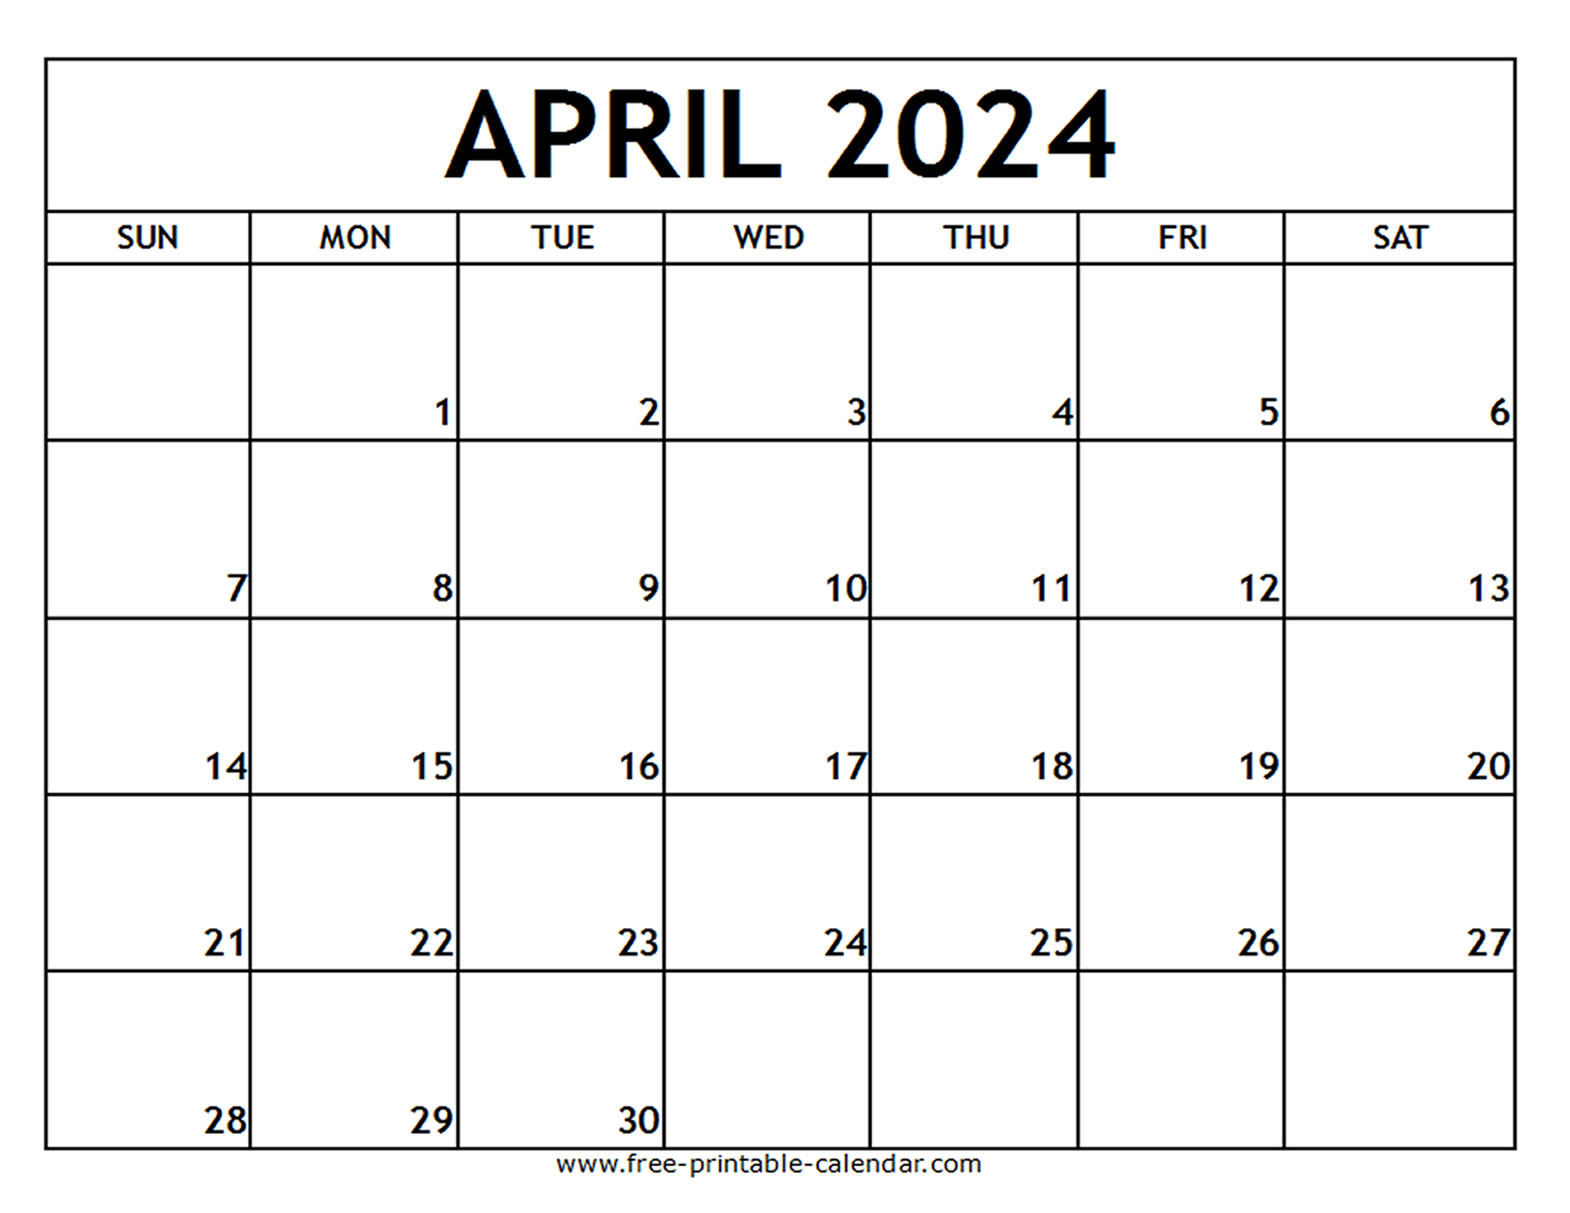 April 2024 Printable Calendar - Free-Printable-Calendar within Free Printable April 2024 Calendar Template Editabler